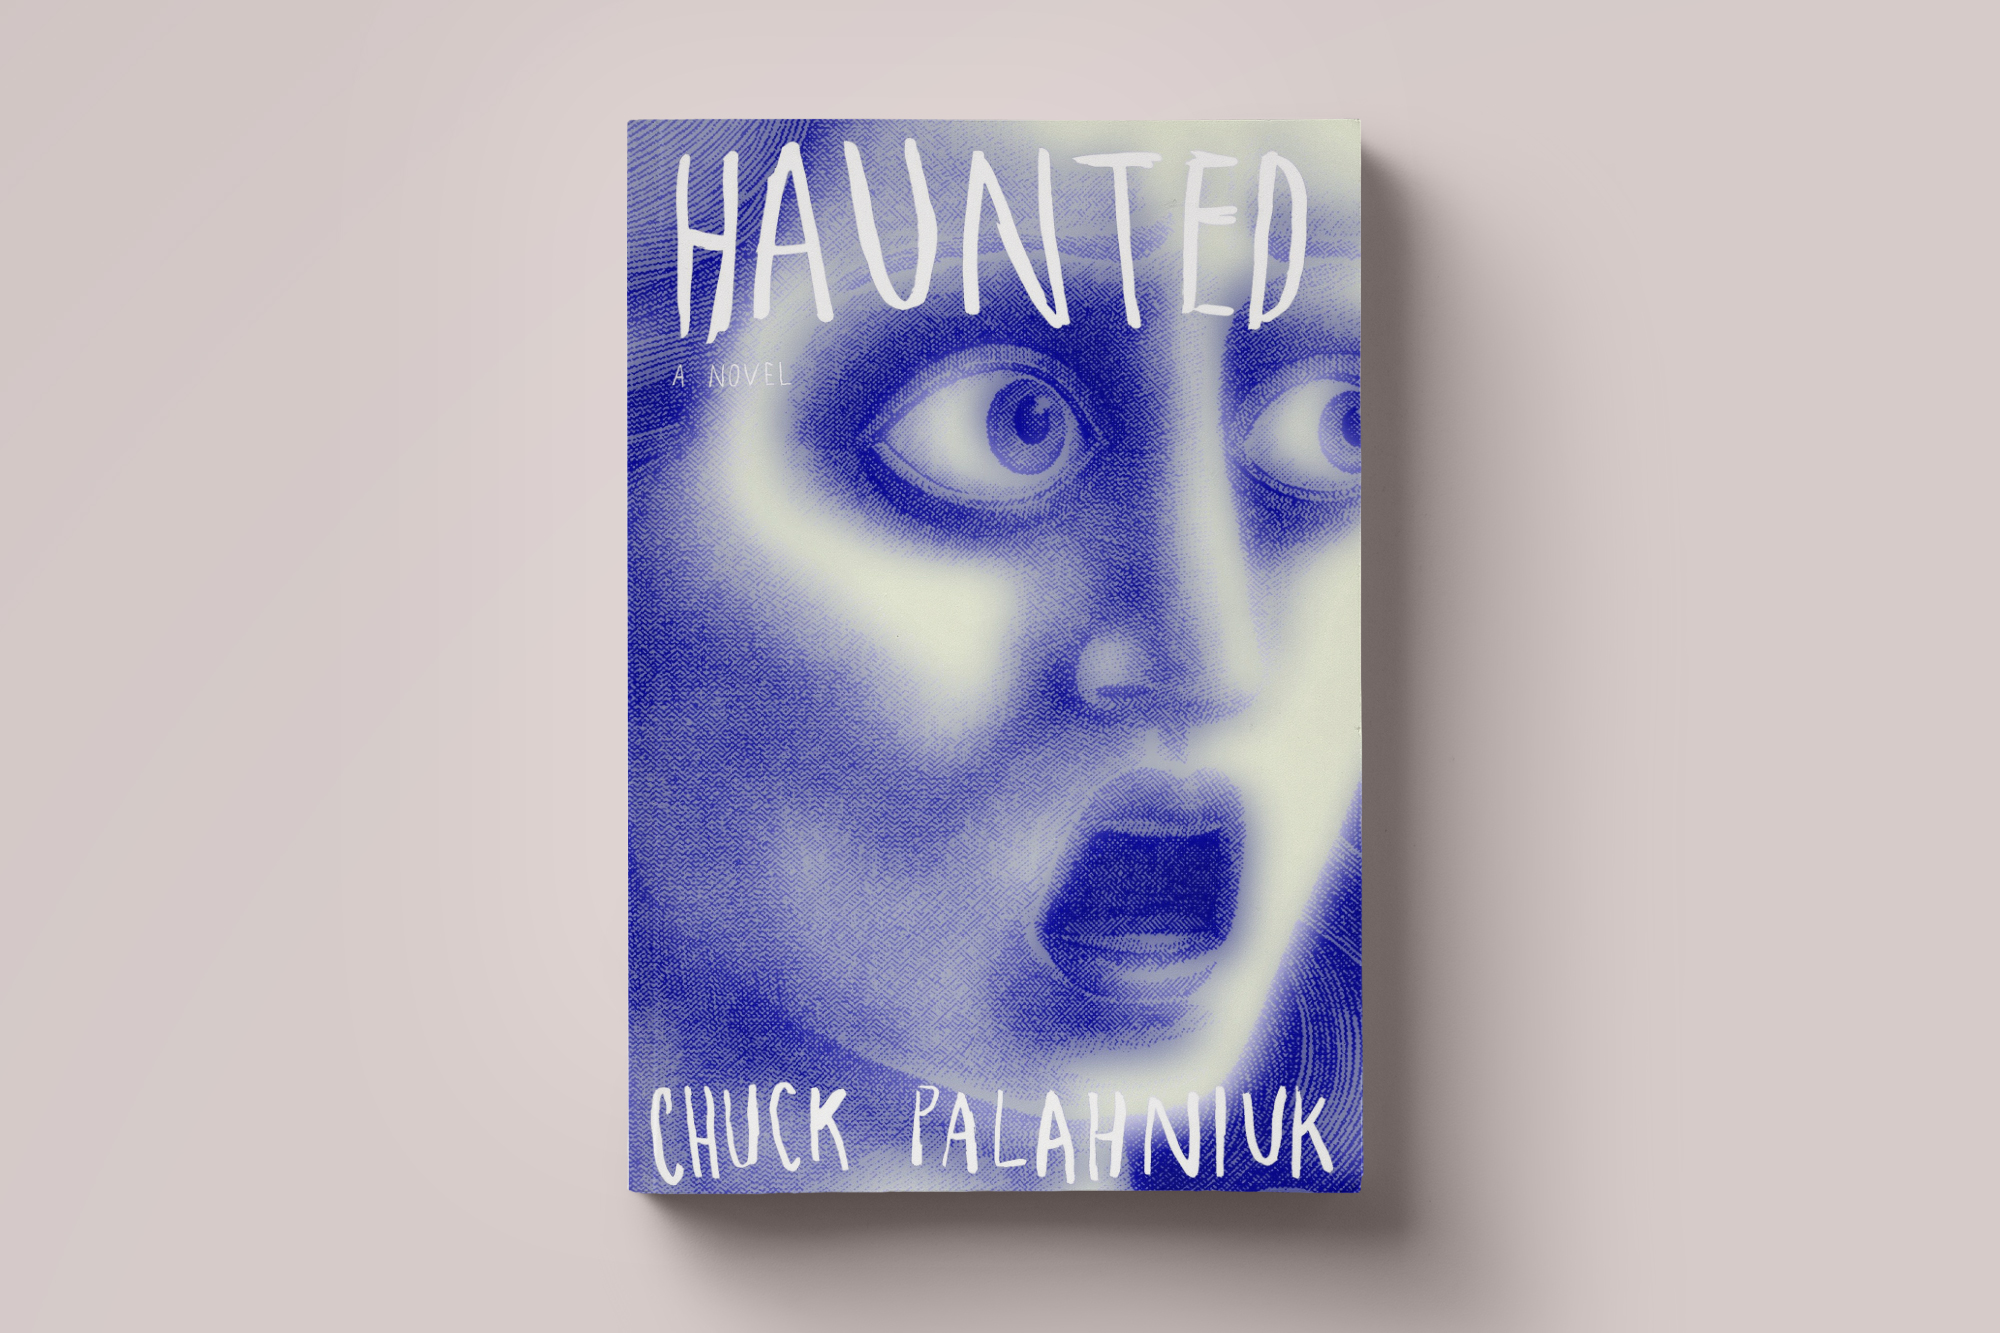 haunted by chuck palahniuk audiobook